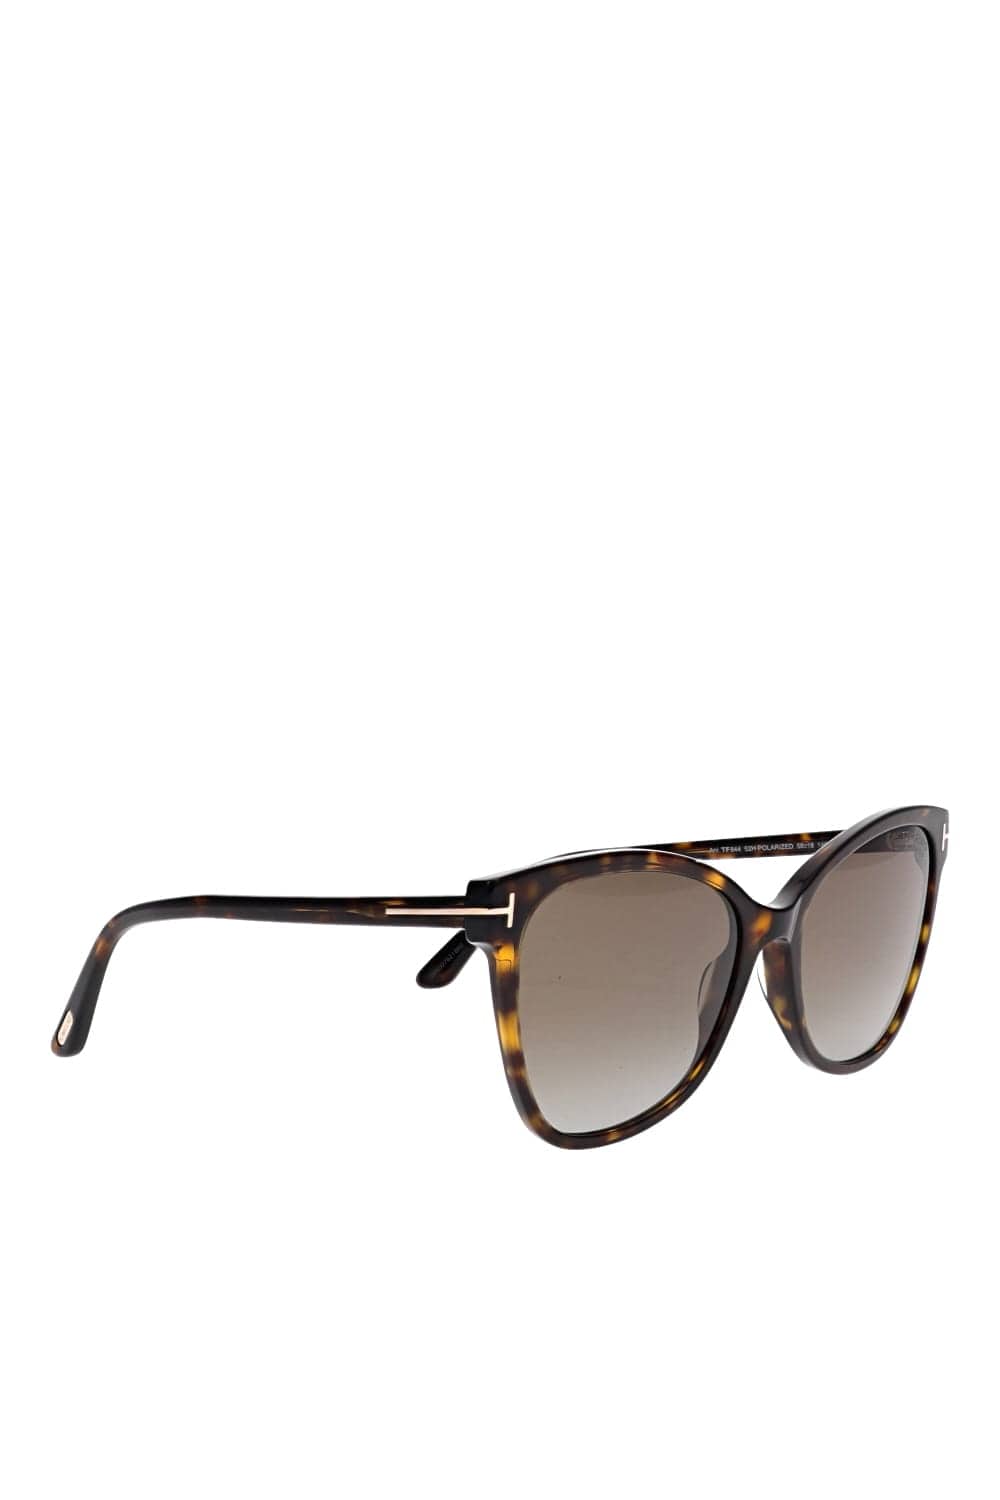 Tom Ford Eyewear FT0844 Classic Dark Havana Polarized Sunglasses FT0844 Havana/Brown